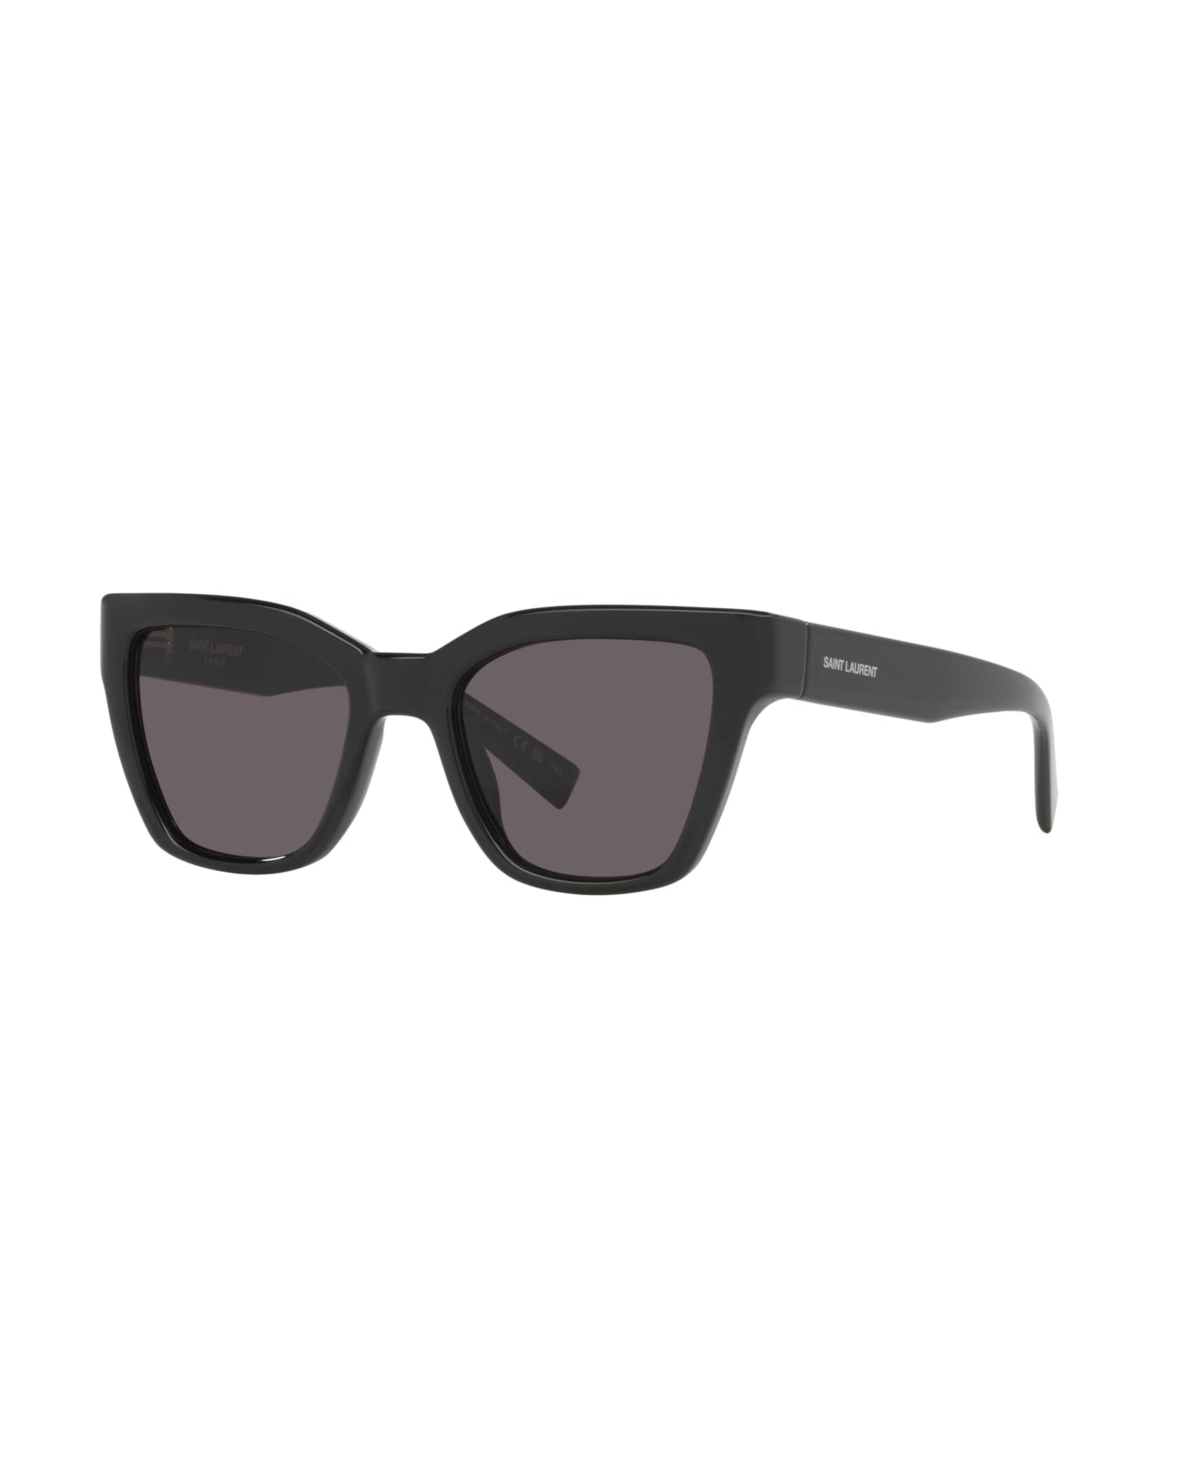 Saint Laurent Women's Sunglasses, Sl 641 In Black